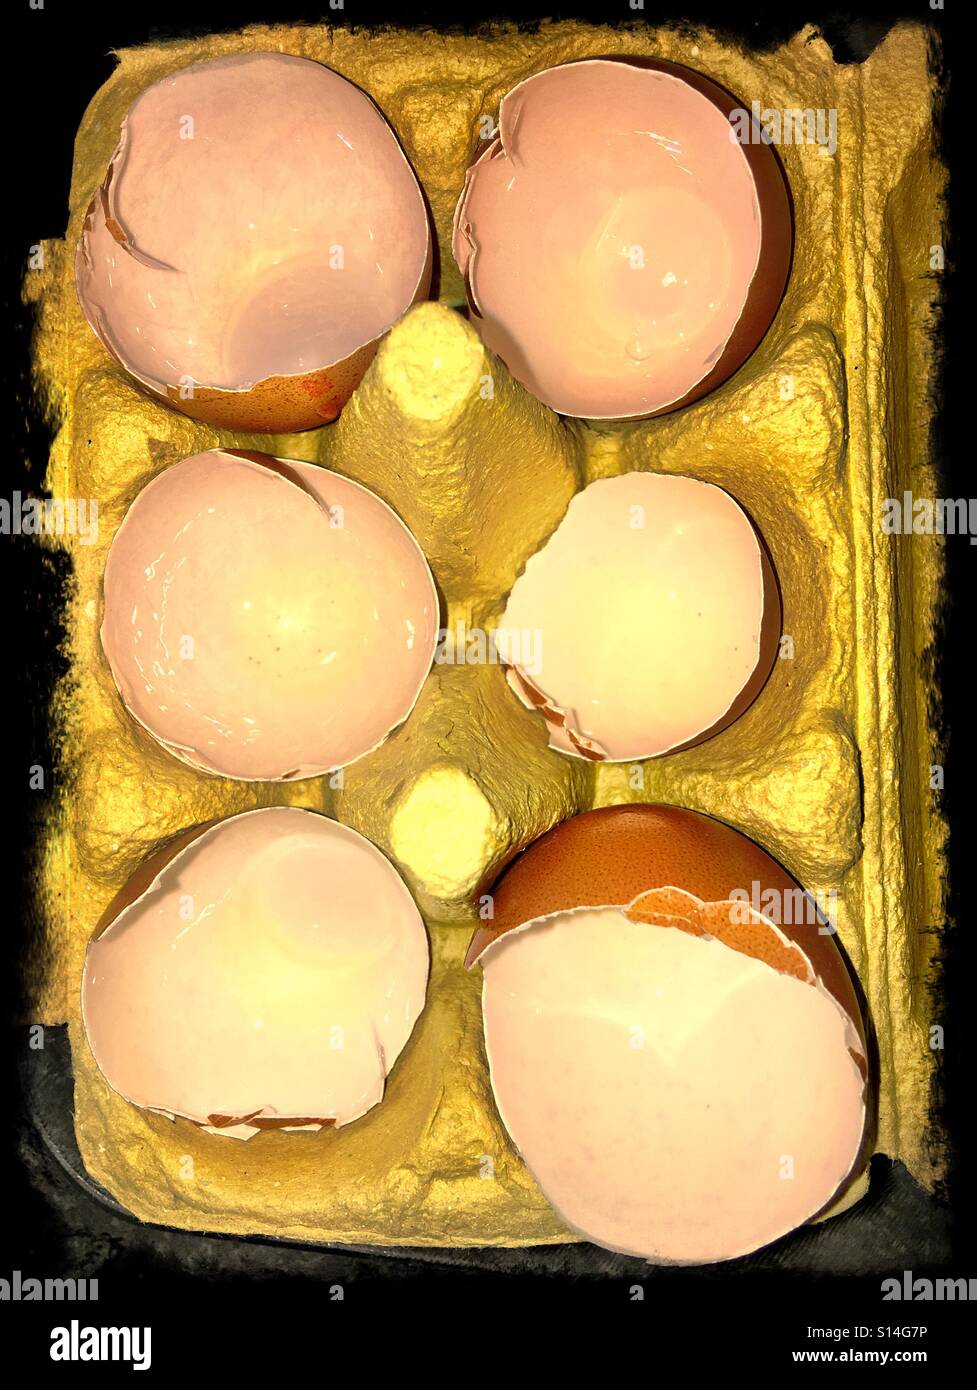 6 broken eggshells displayed in a yellow cardboard egg box Stock Photo